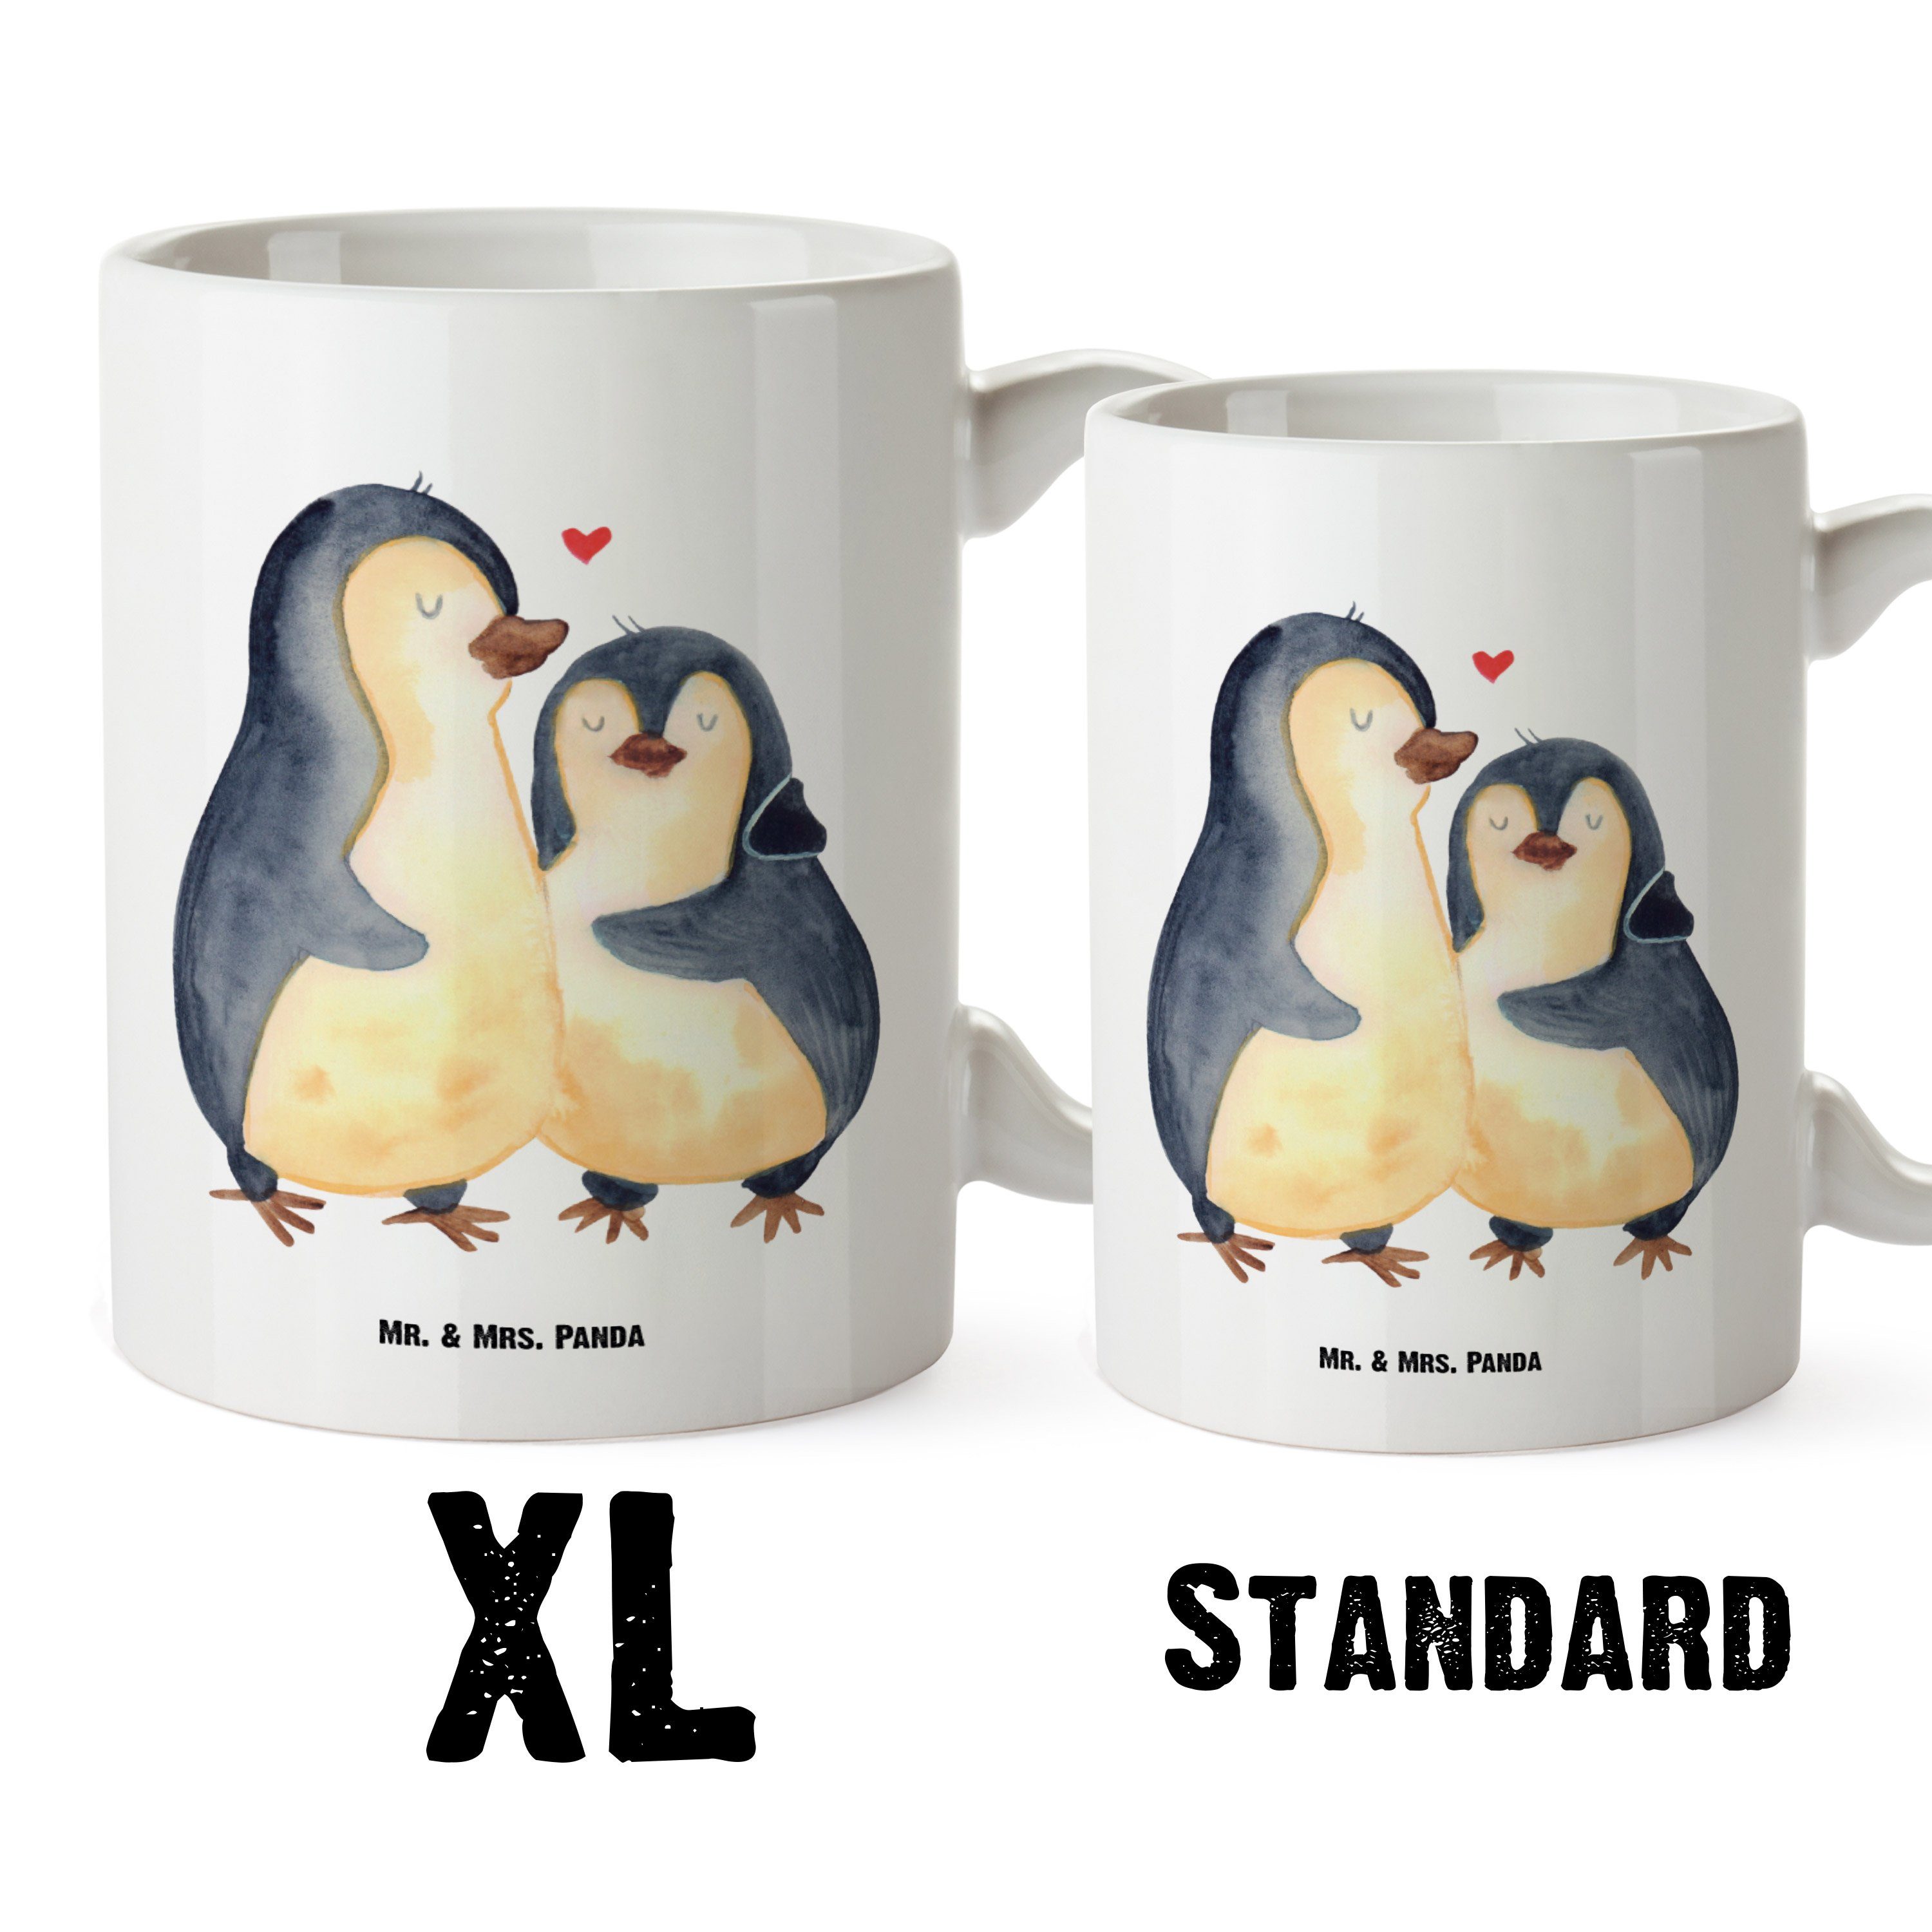 Mr. & Mrs. umarmend Tasse - Pinguin XL Tasse spülmaschinenfest, Weiß - Umarmung, Panda Geschenk, Keramik Seev